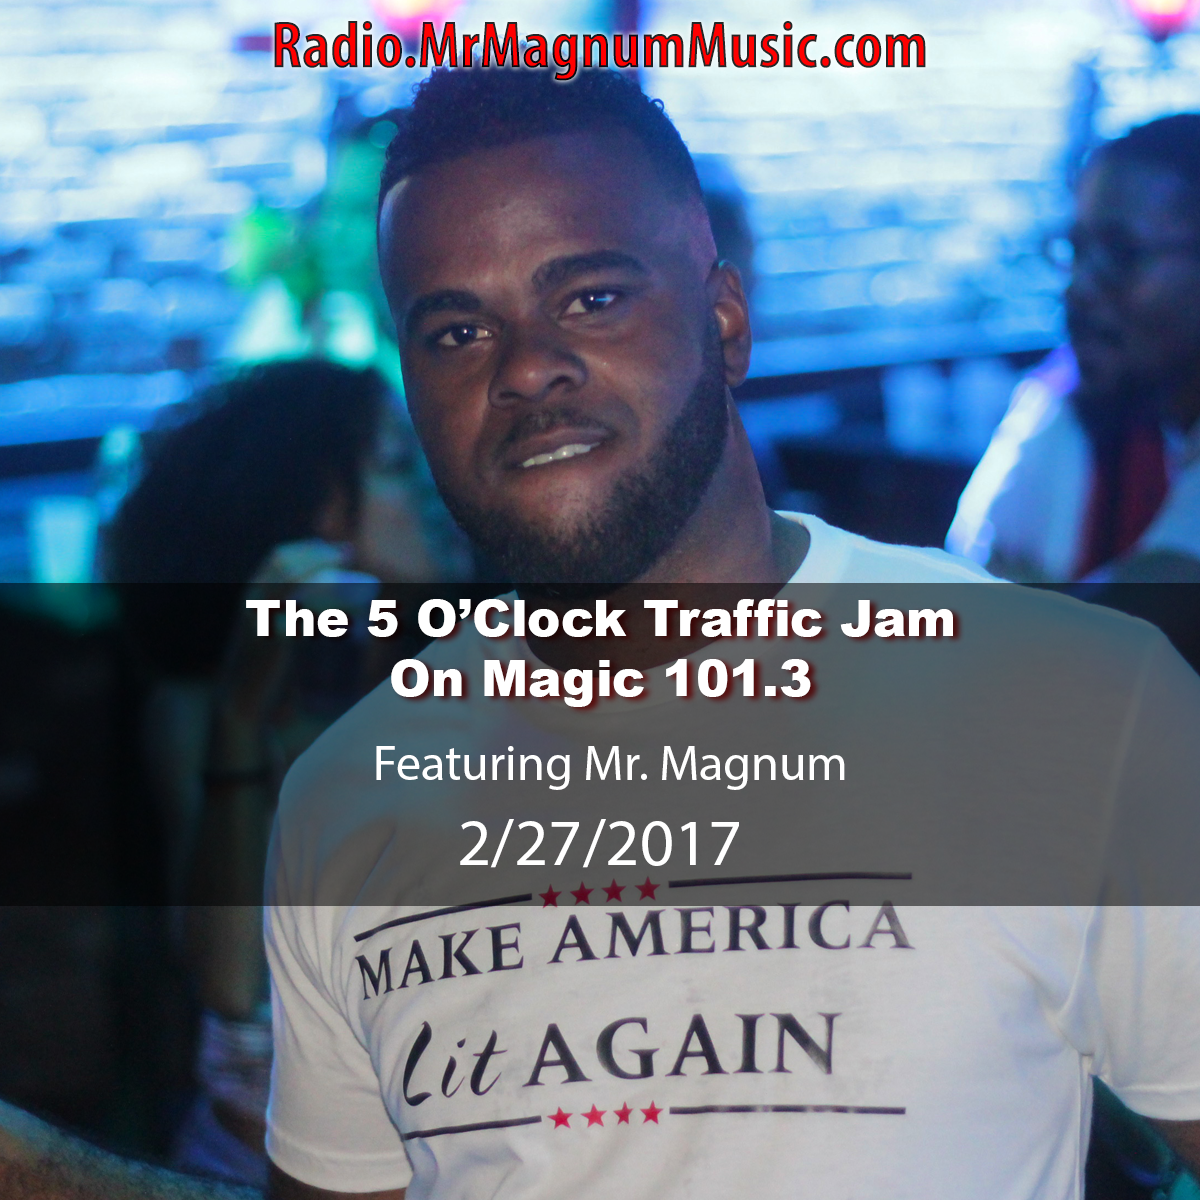 The 5 O’Clock Traffic Jam 2-27-2017 on Magic 101.3